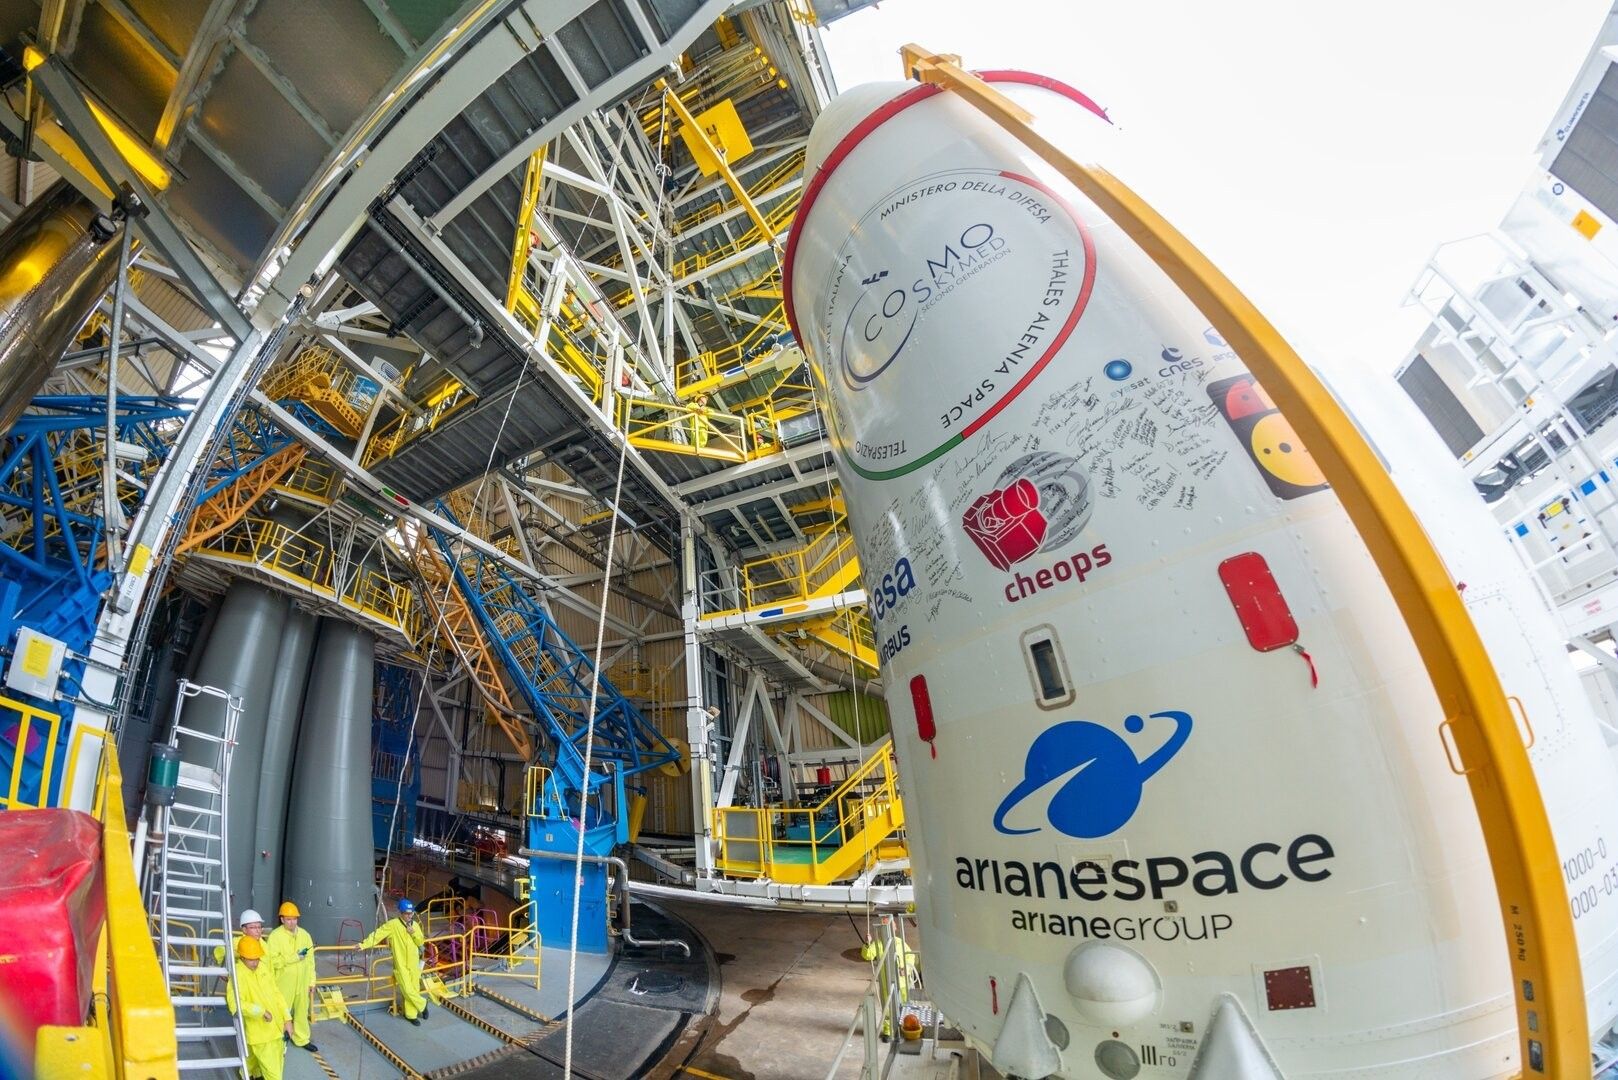 Fot. Arianespace/ESA [esa.int]